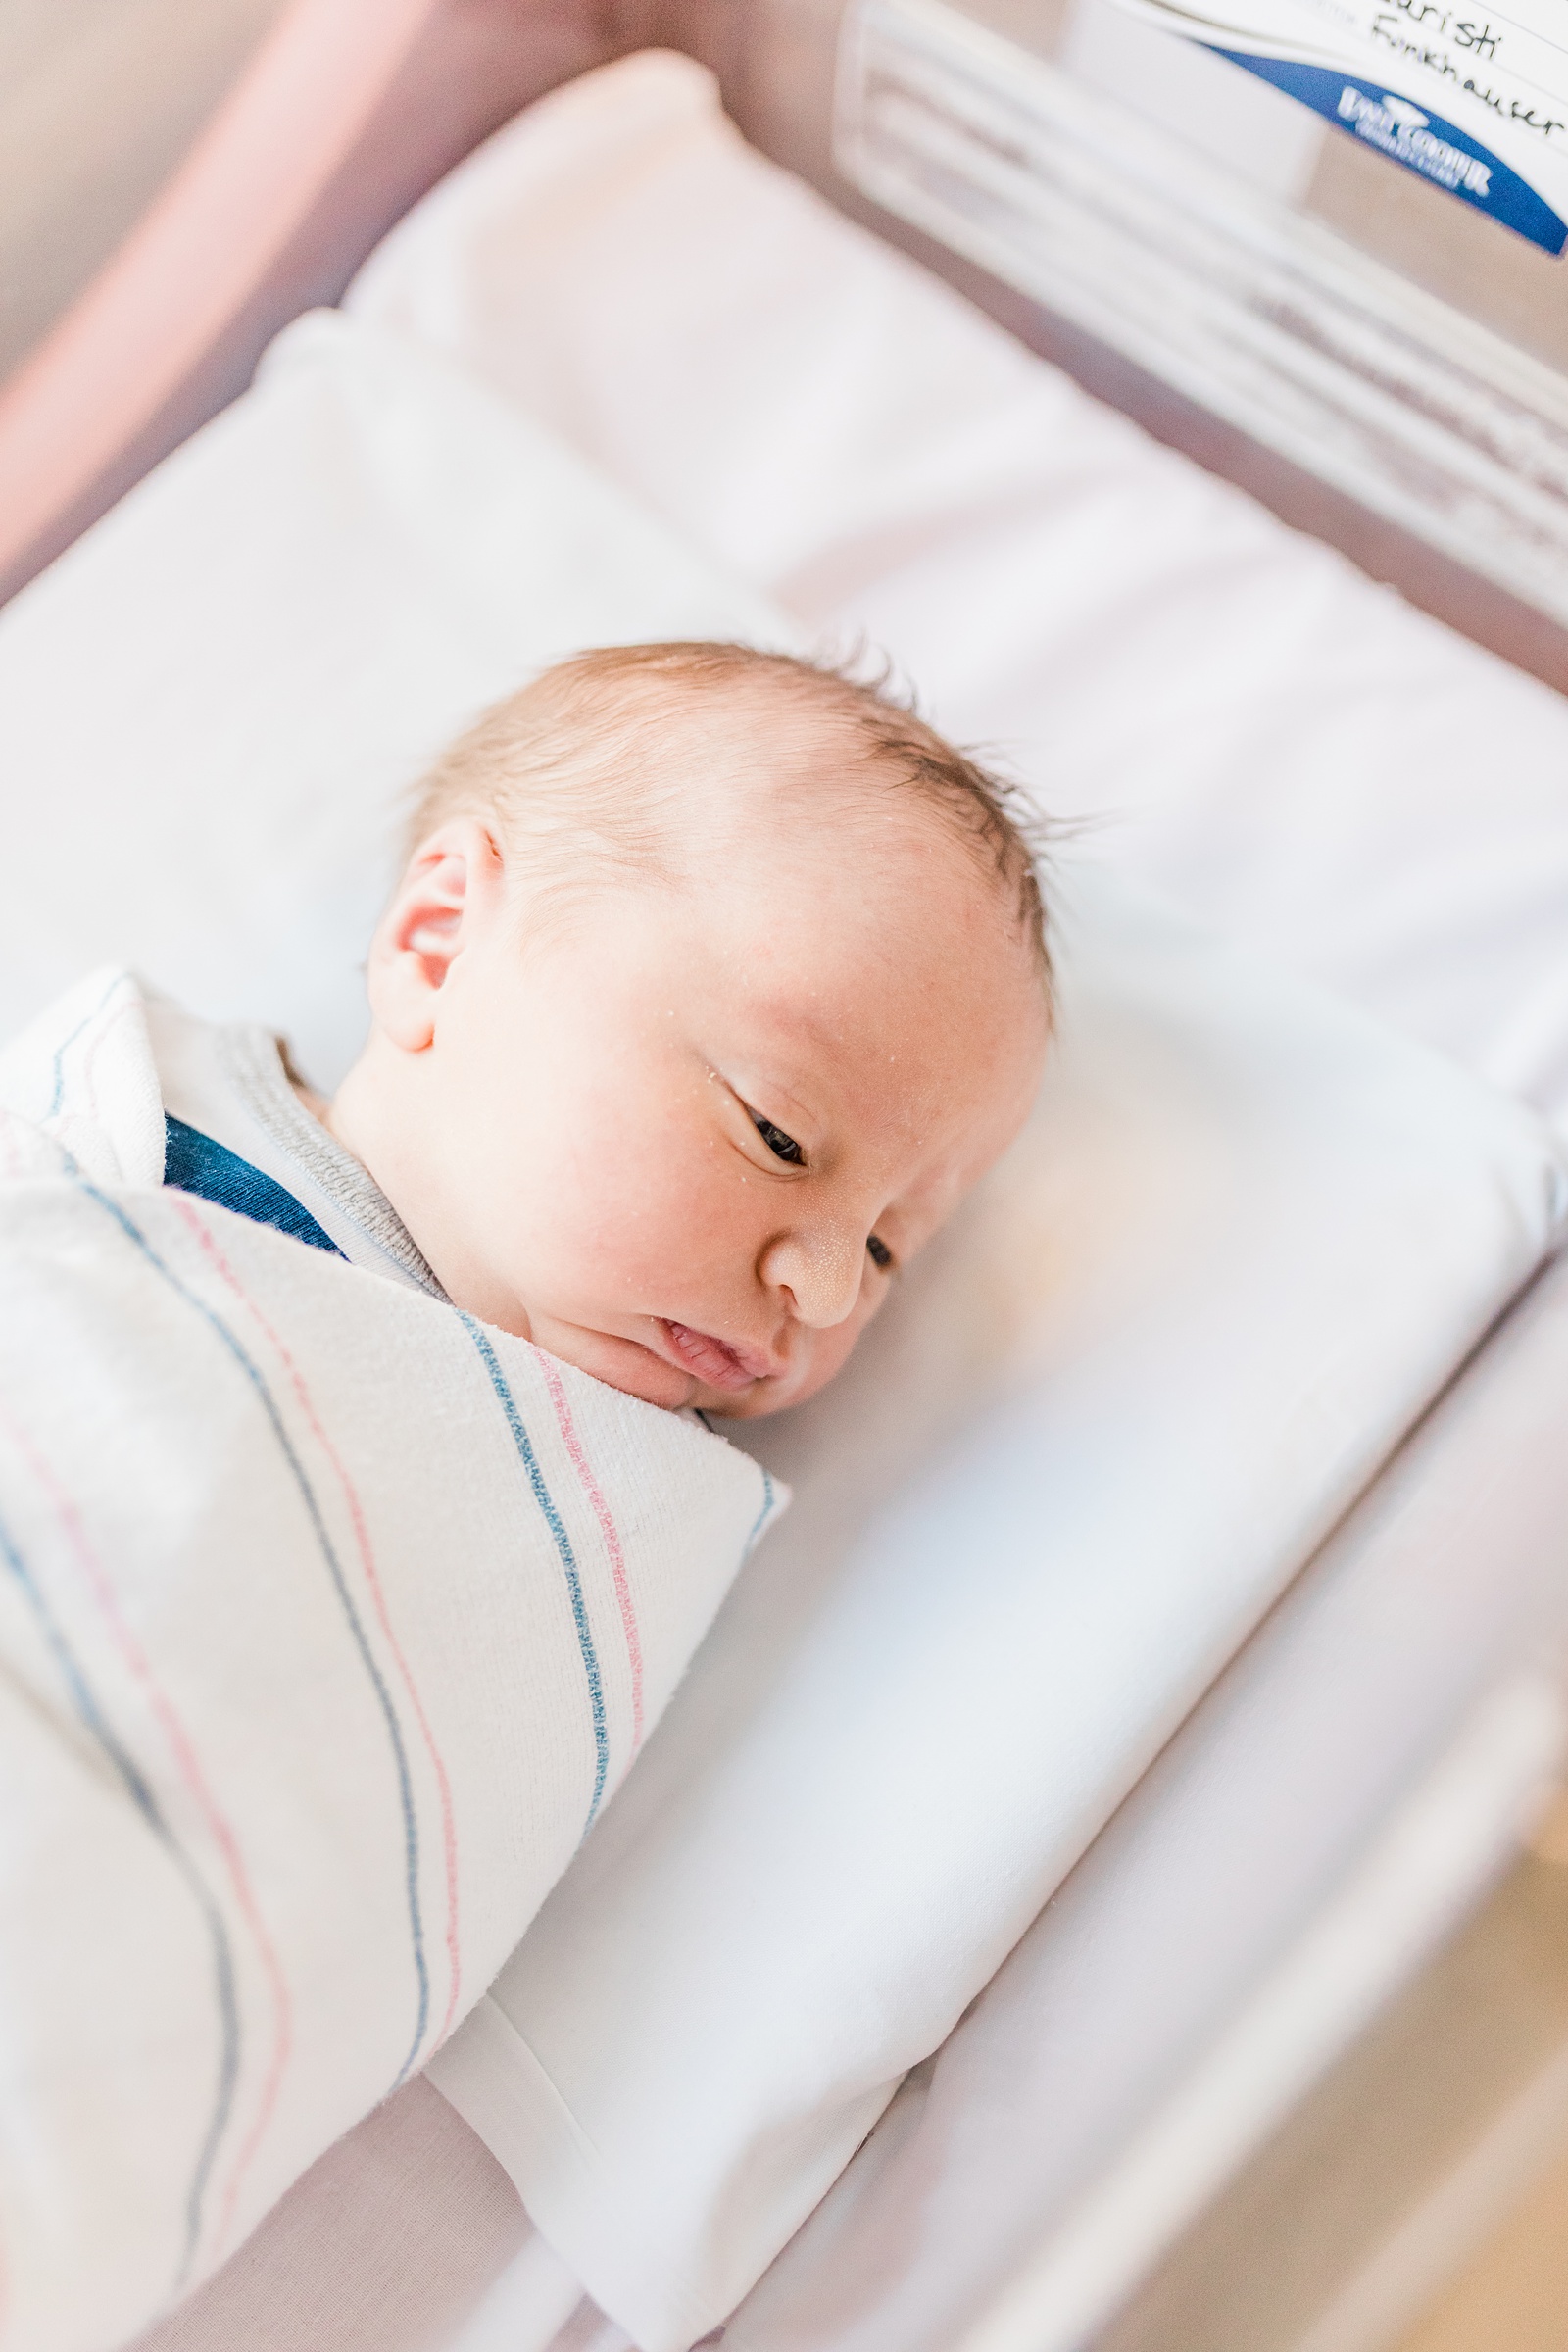 Newborn in hospital bassinet | Caitlyn Motycka Photography